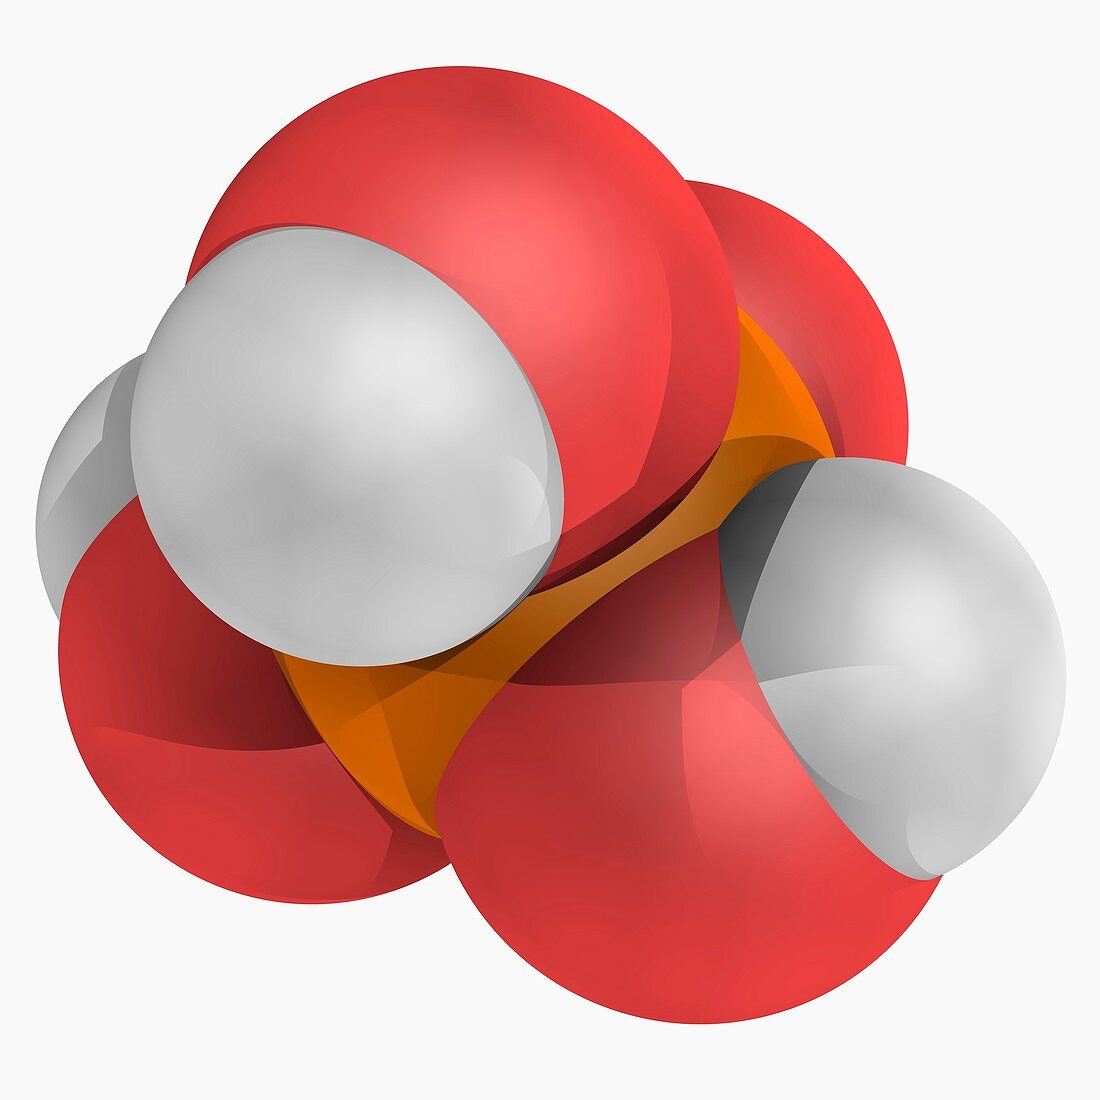 Phosphoric acid molecule